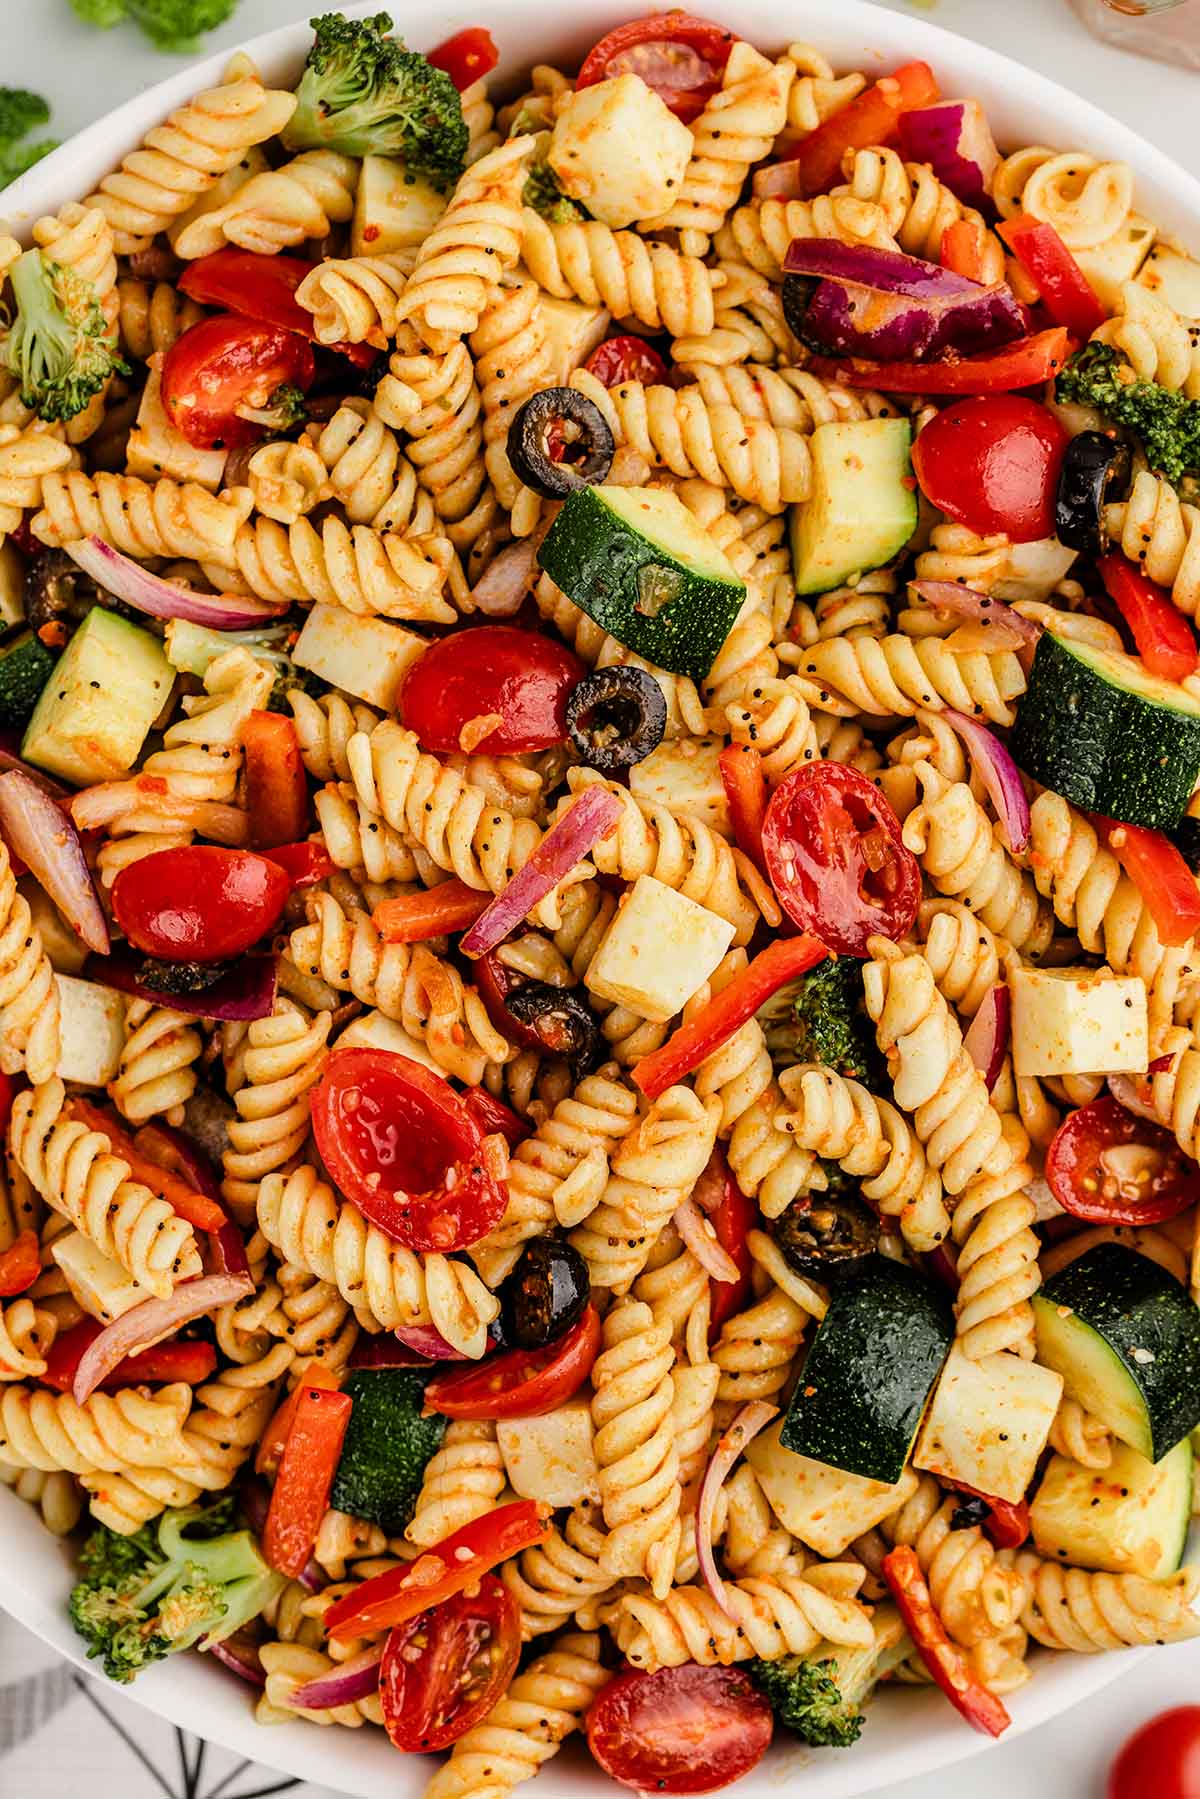 pasta salad with italian salad dressing and seasoning mix.